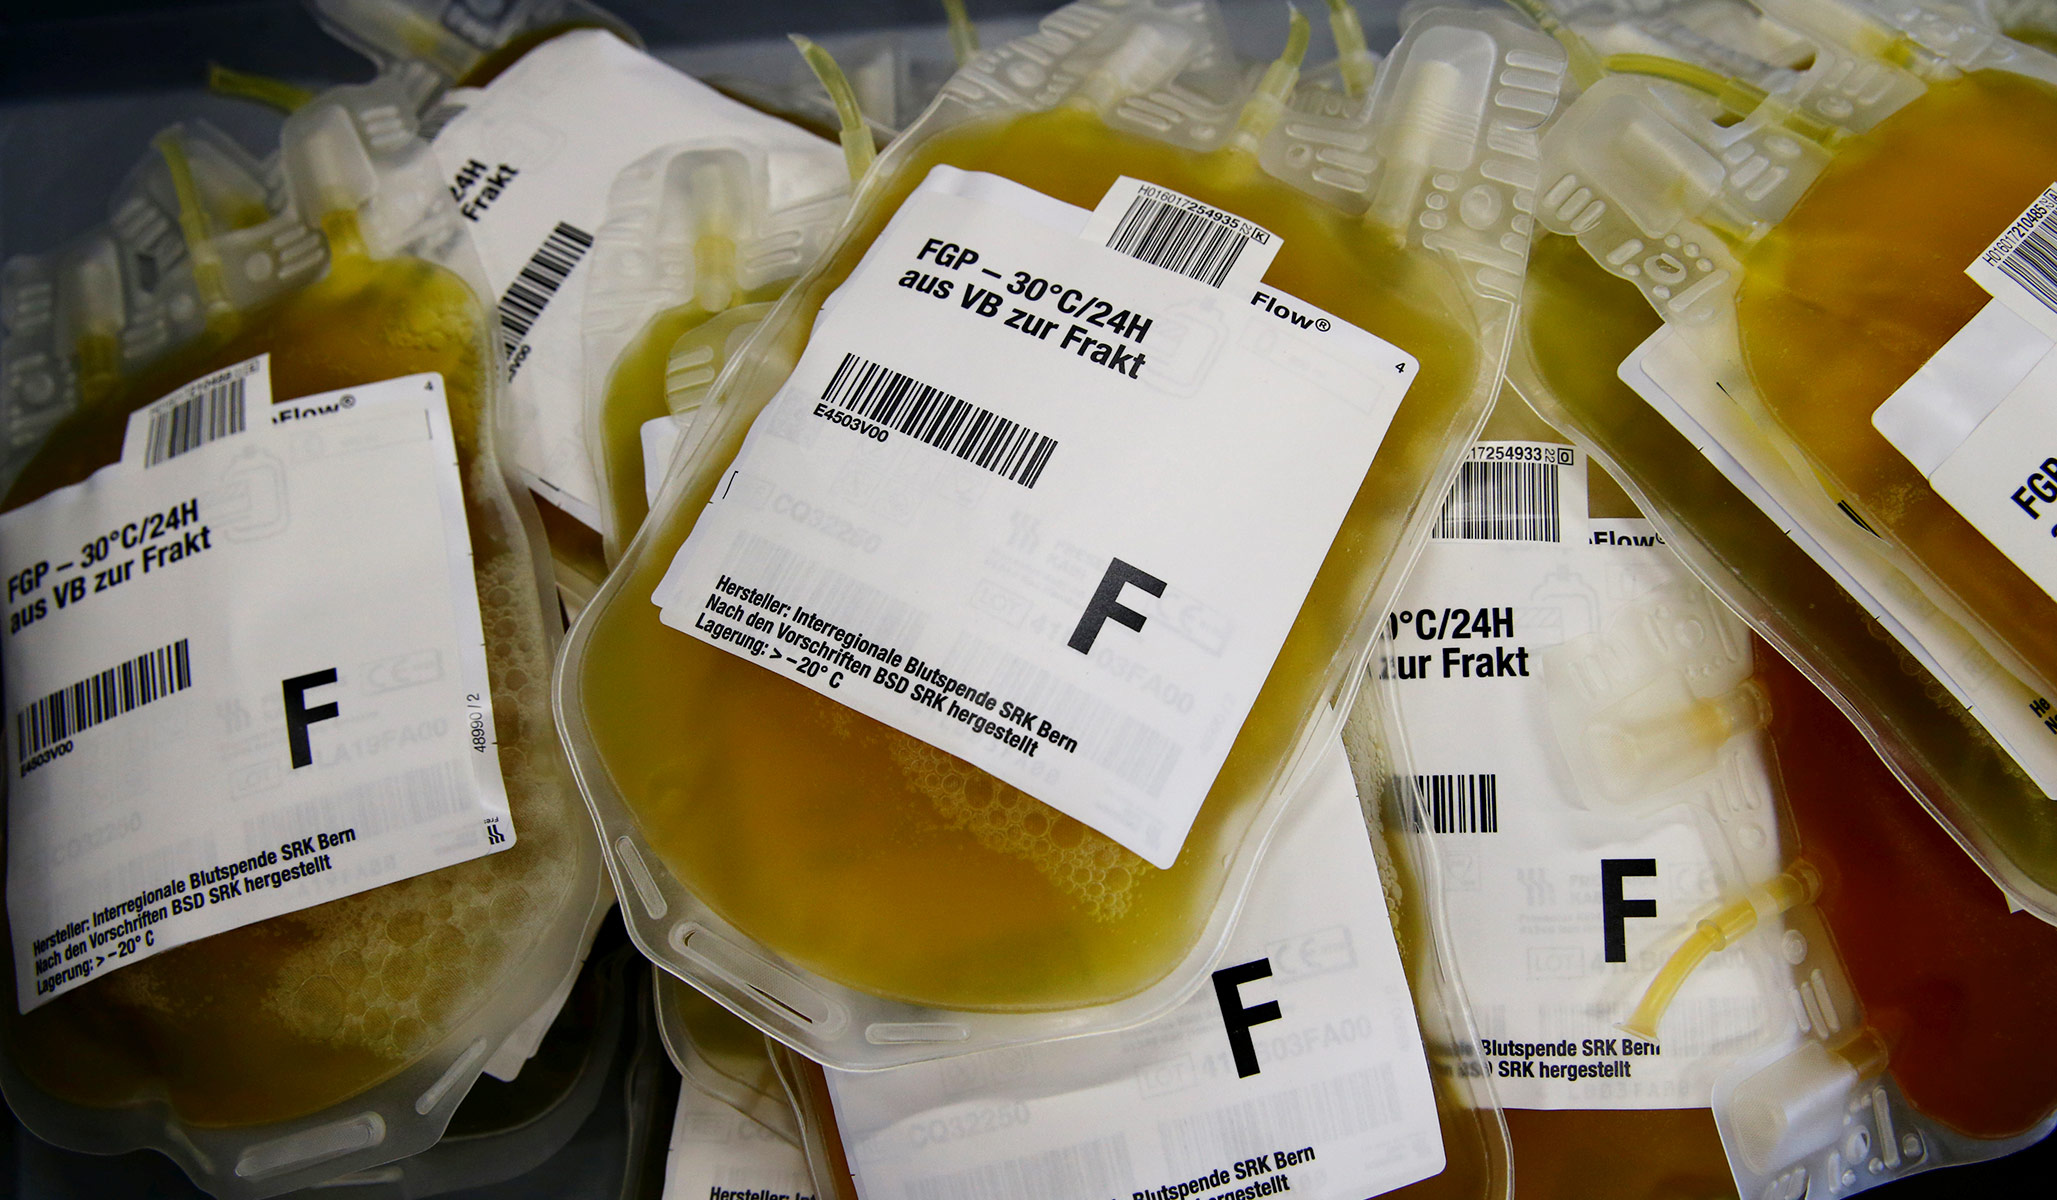 WHO Creates Global BloodPlasma Shortage National Review